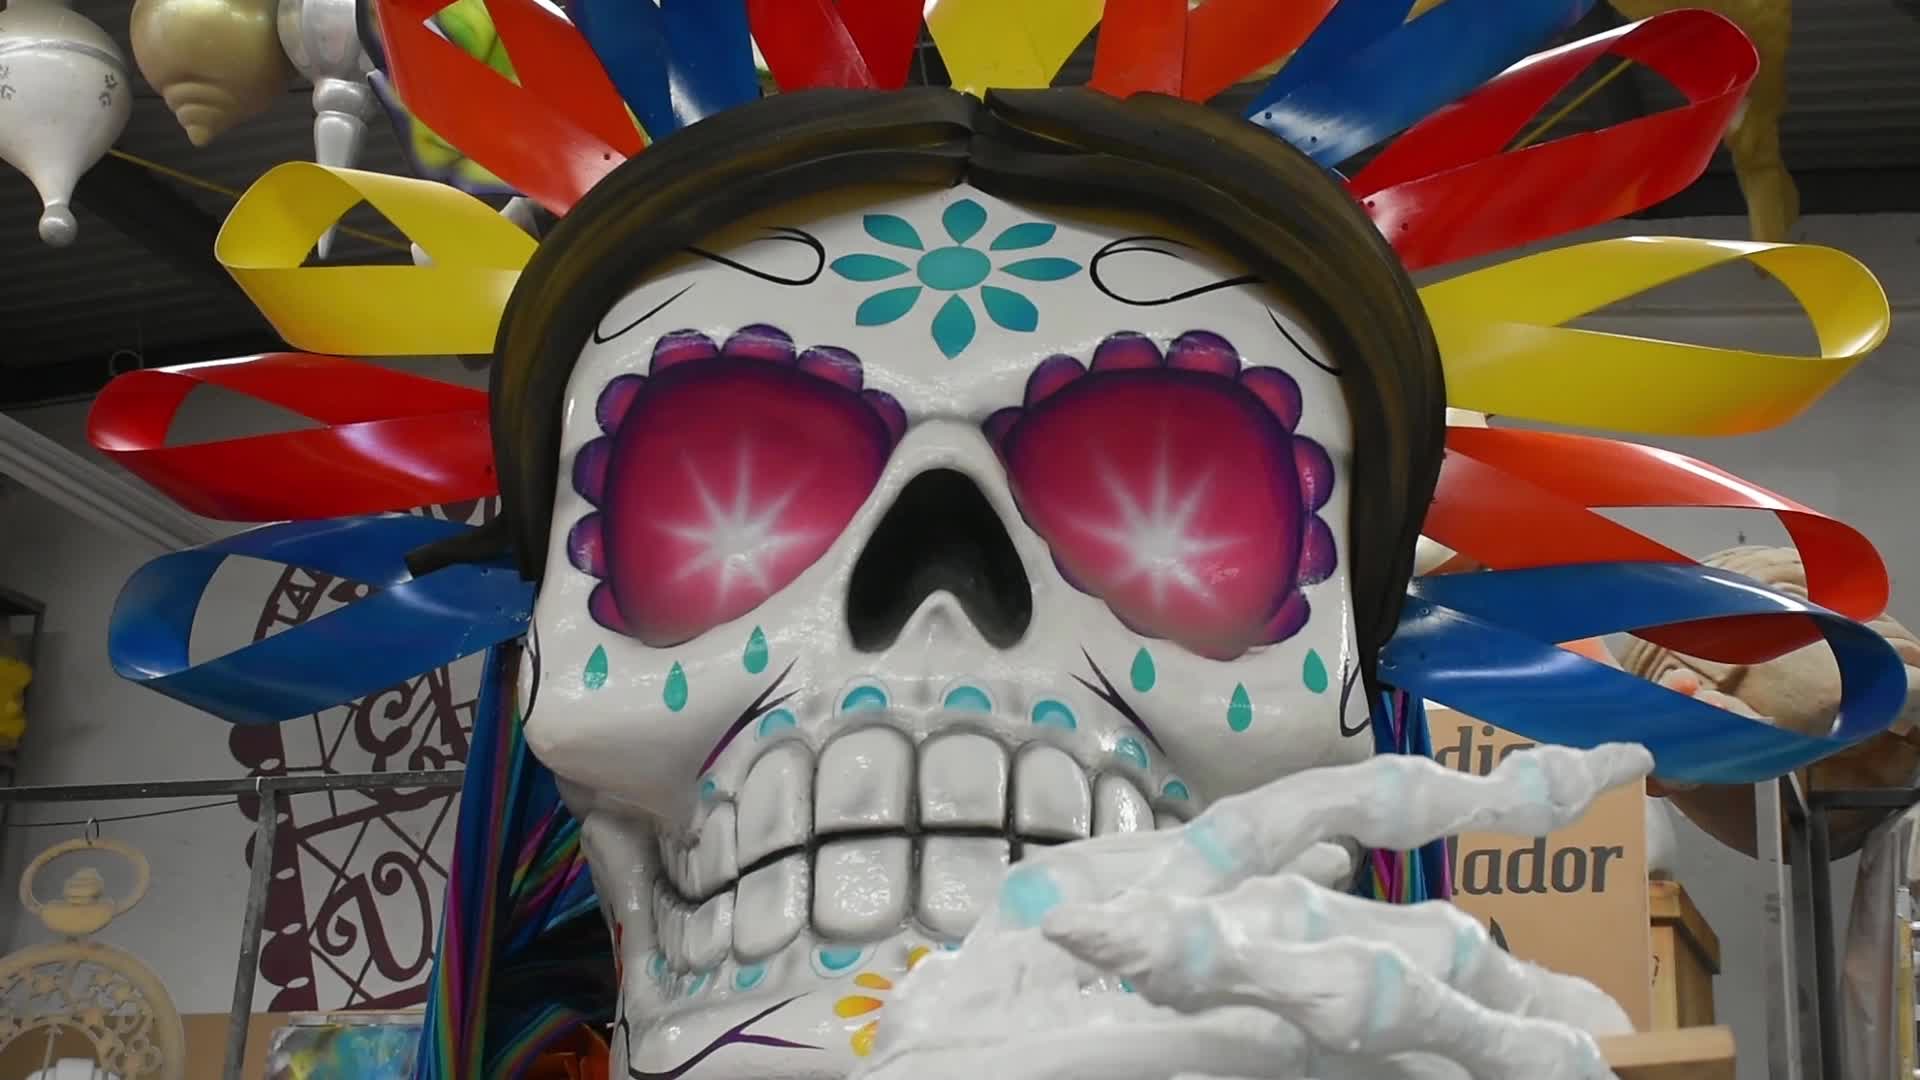 The Dead Parade preparation in Mexico city